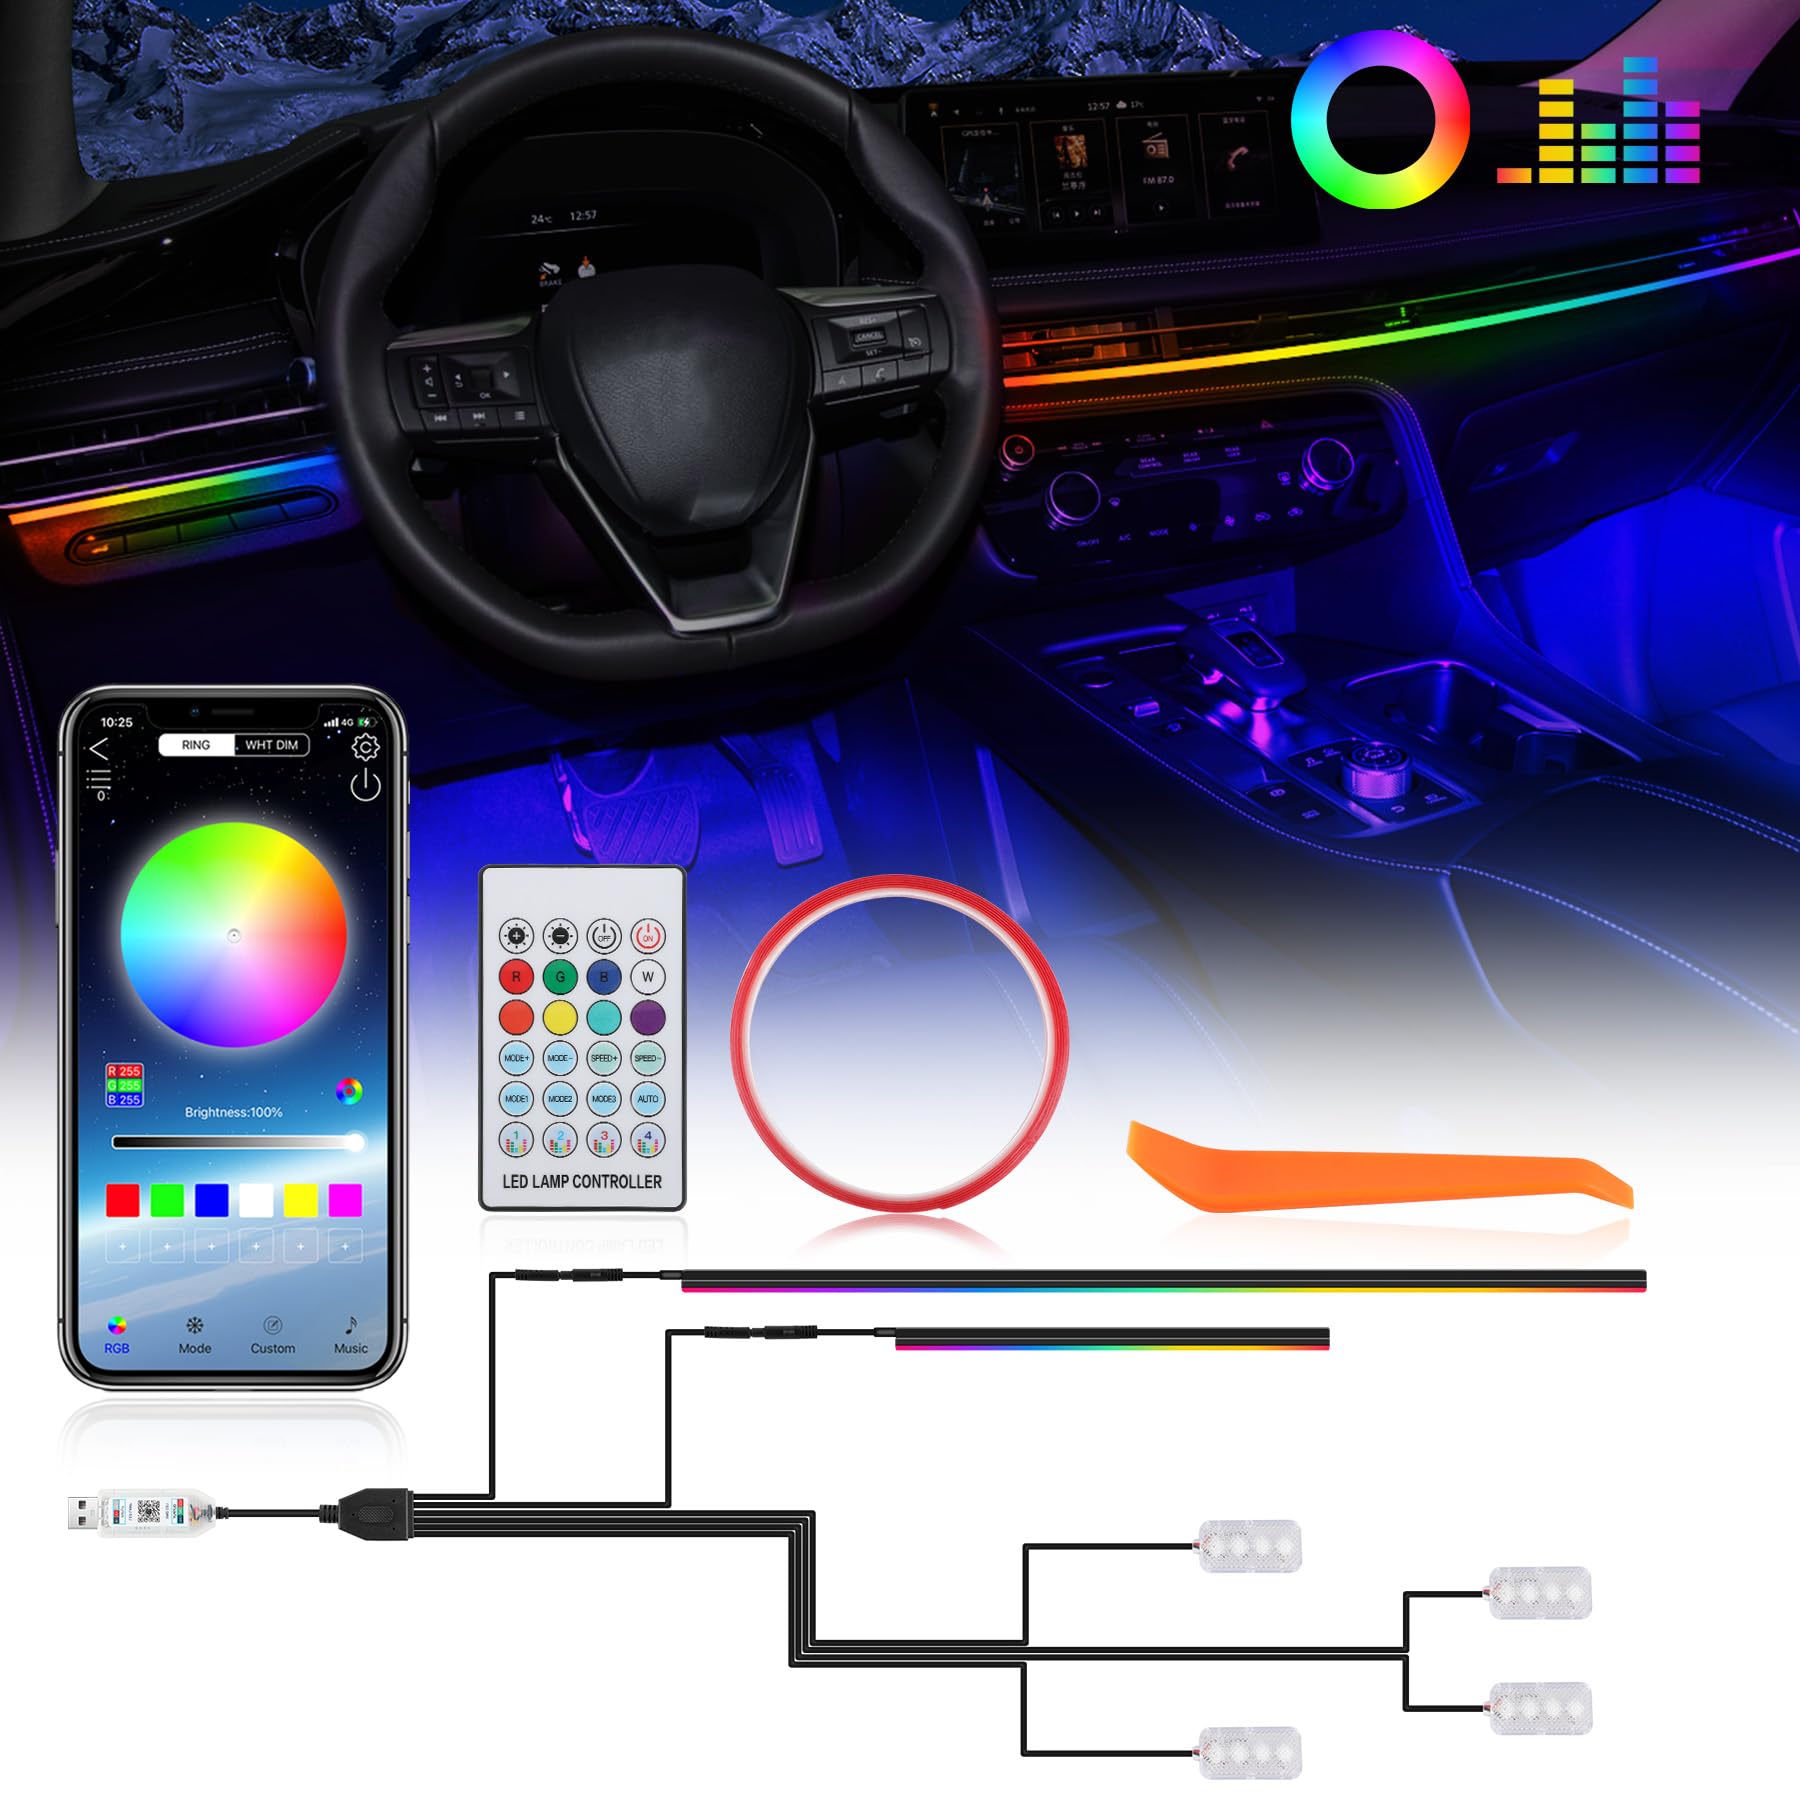 OMECO LED Innenbeleuchtung Auto USB Ambientebeleuchtung Auto Fußraum Rainbow Car LED Strip Light 16 Million Dynamic Chasing Music Sync Neon LED Strip Set mit APP Steuerung und Fernbedienung von OMECO